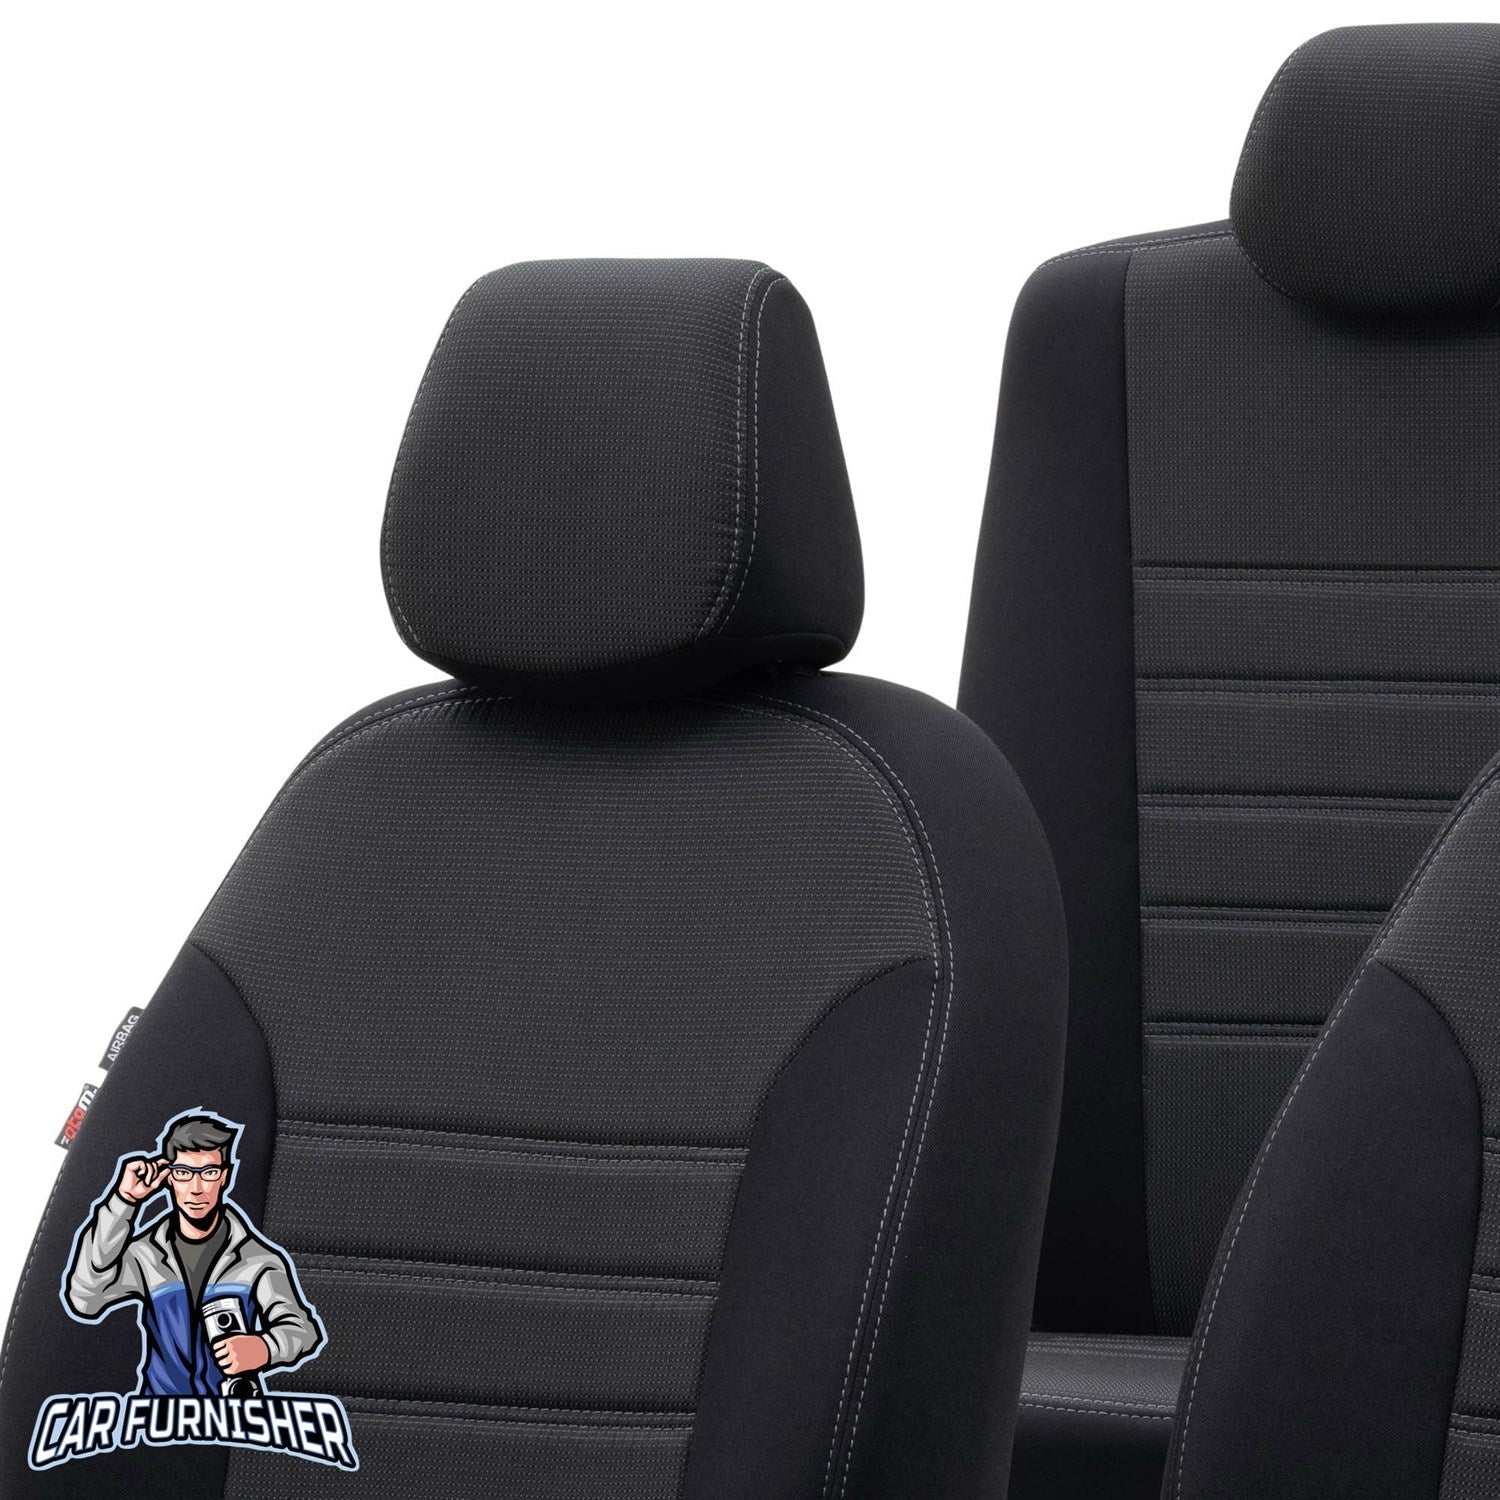 Volvo XC40 Car Seat Cover 2018-2023 T3/T4/T5 Original Design Dark Gray Full Set (5 Seats + Handrest) Fabric